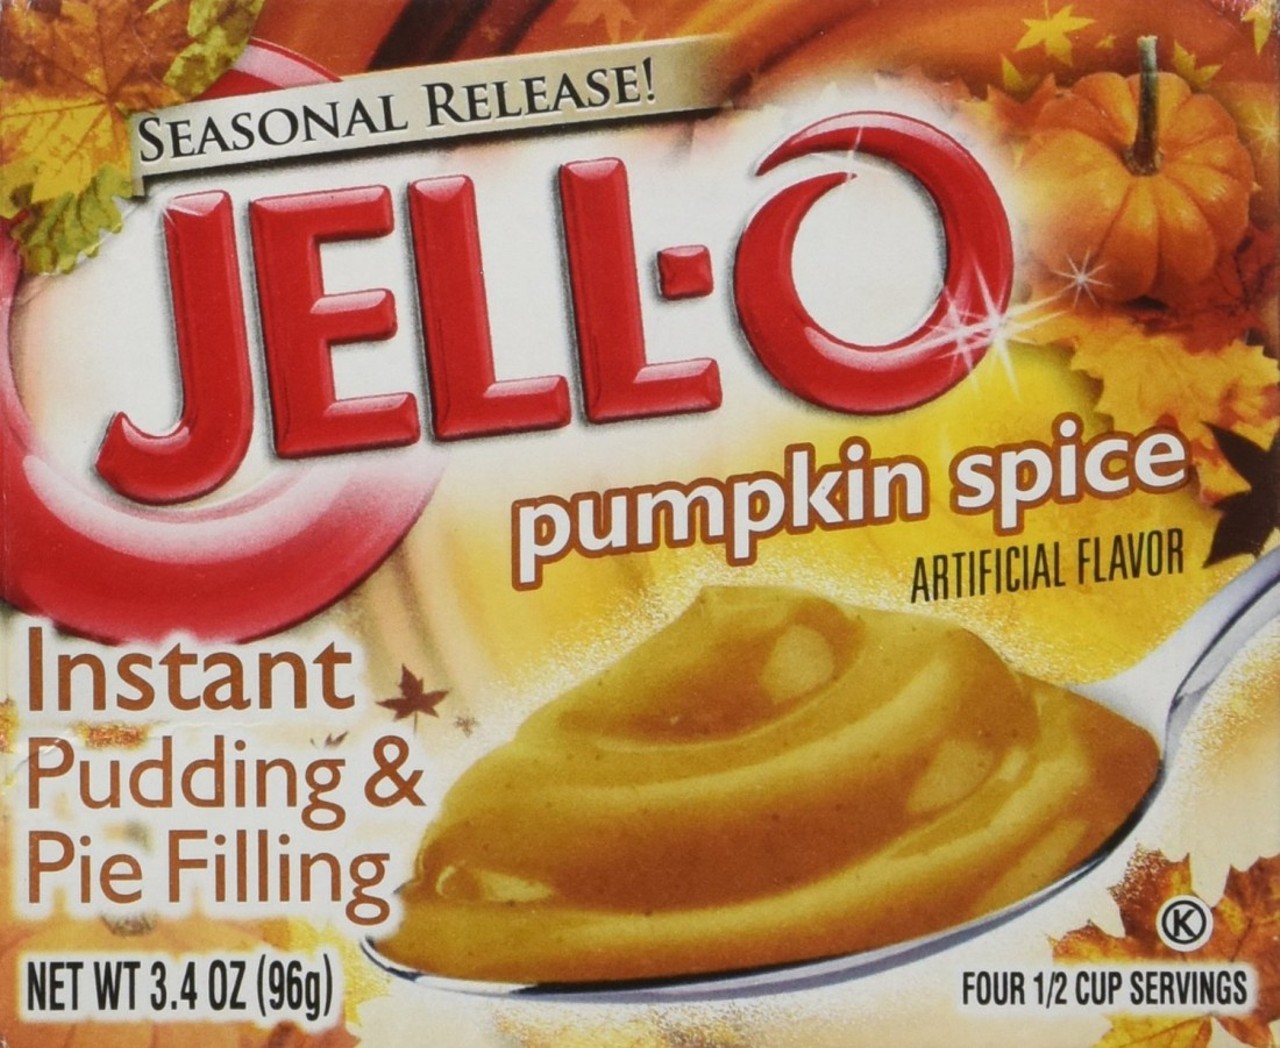 Pumpkin Spice Jell-O Pudding
Amazon